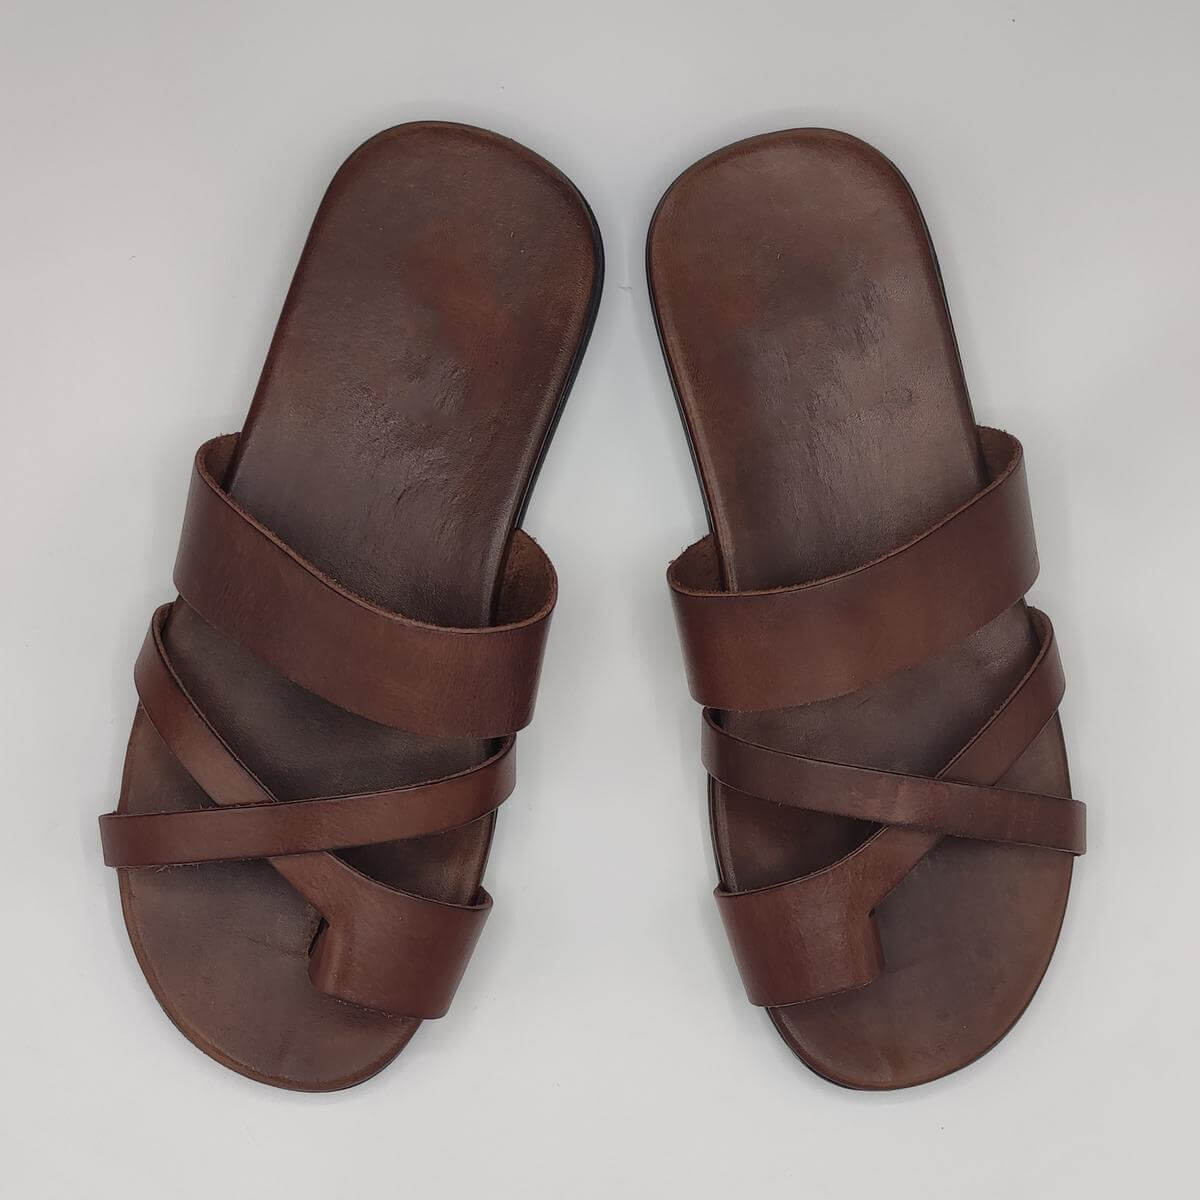 Men's Sandals - Leather Sandals & Slip-Ons